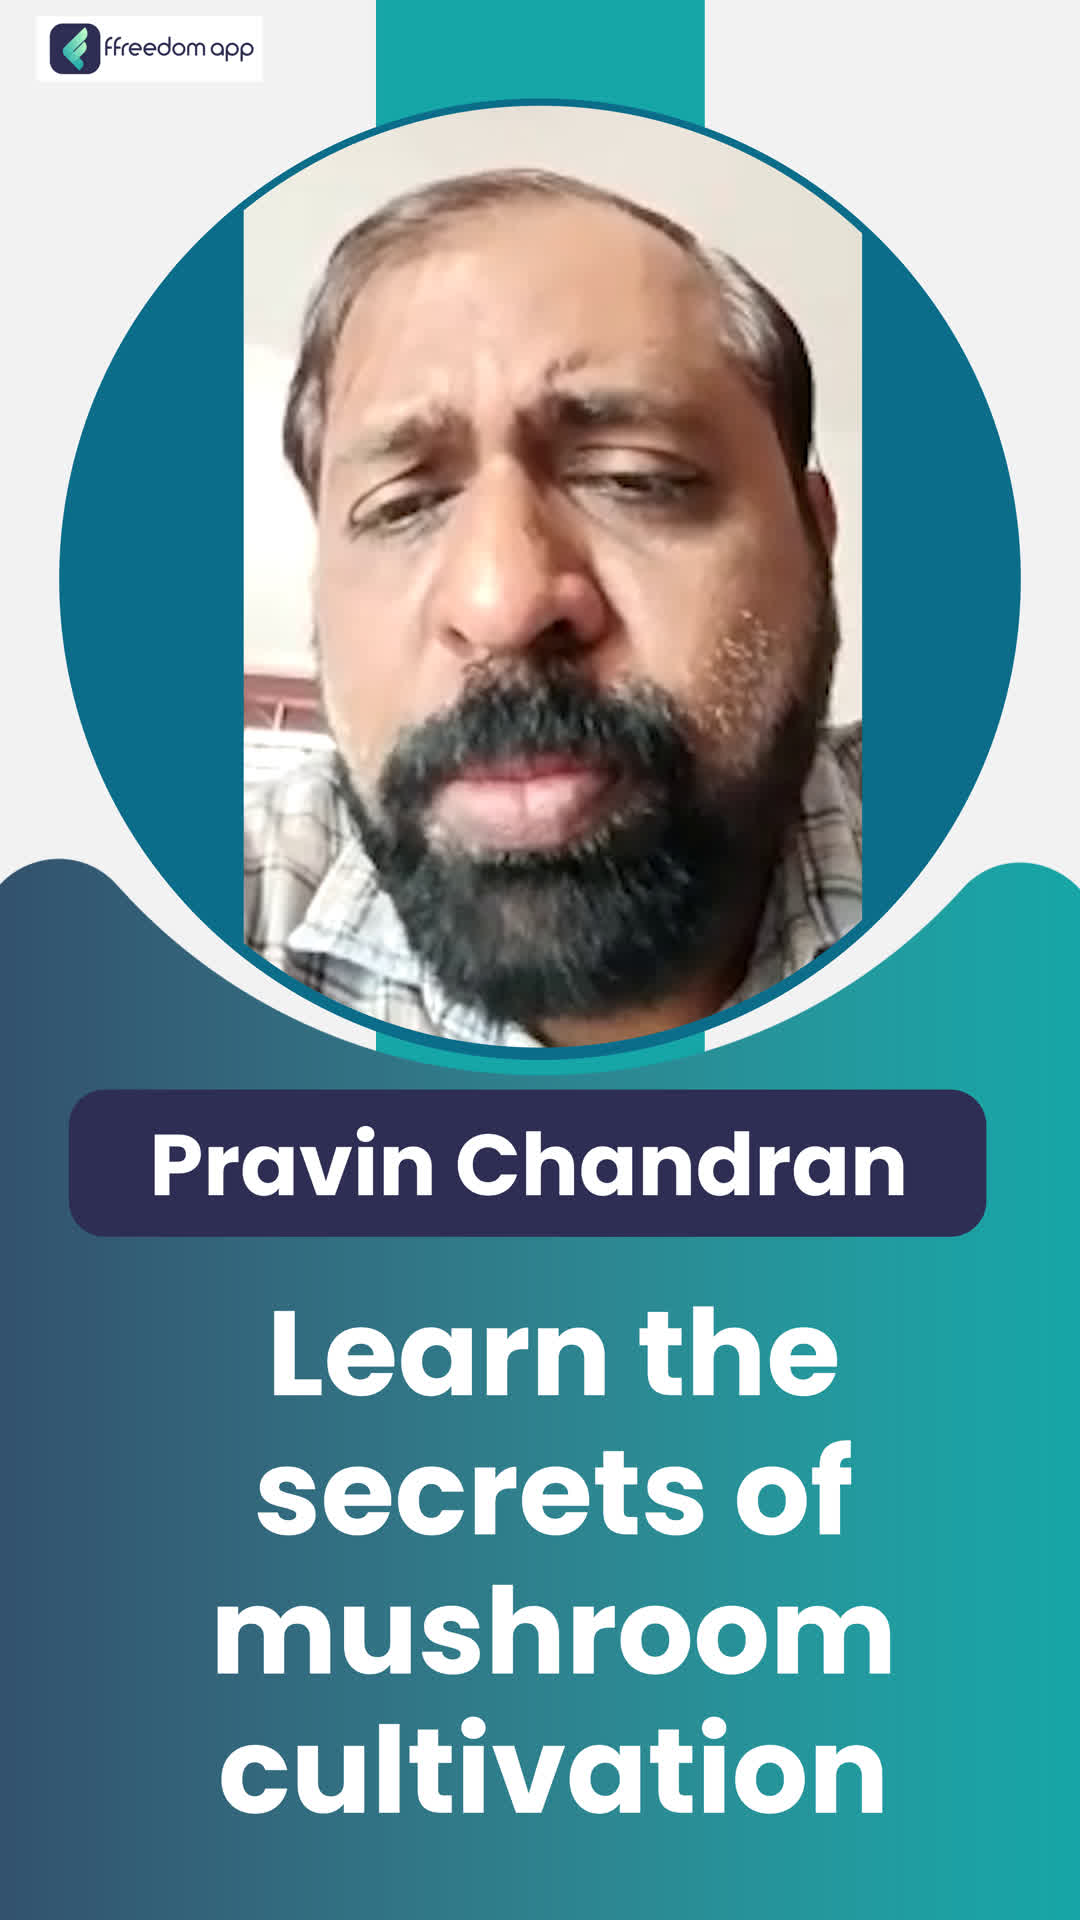 Pravin Chandran's Honest Review of ffreedom app - Thrissur ,Kerala